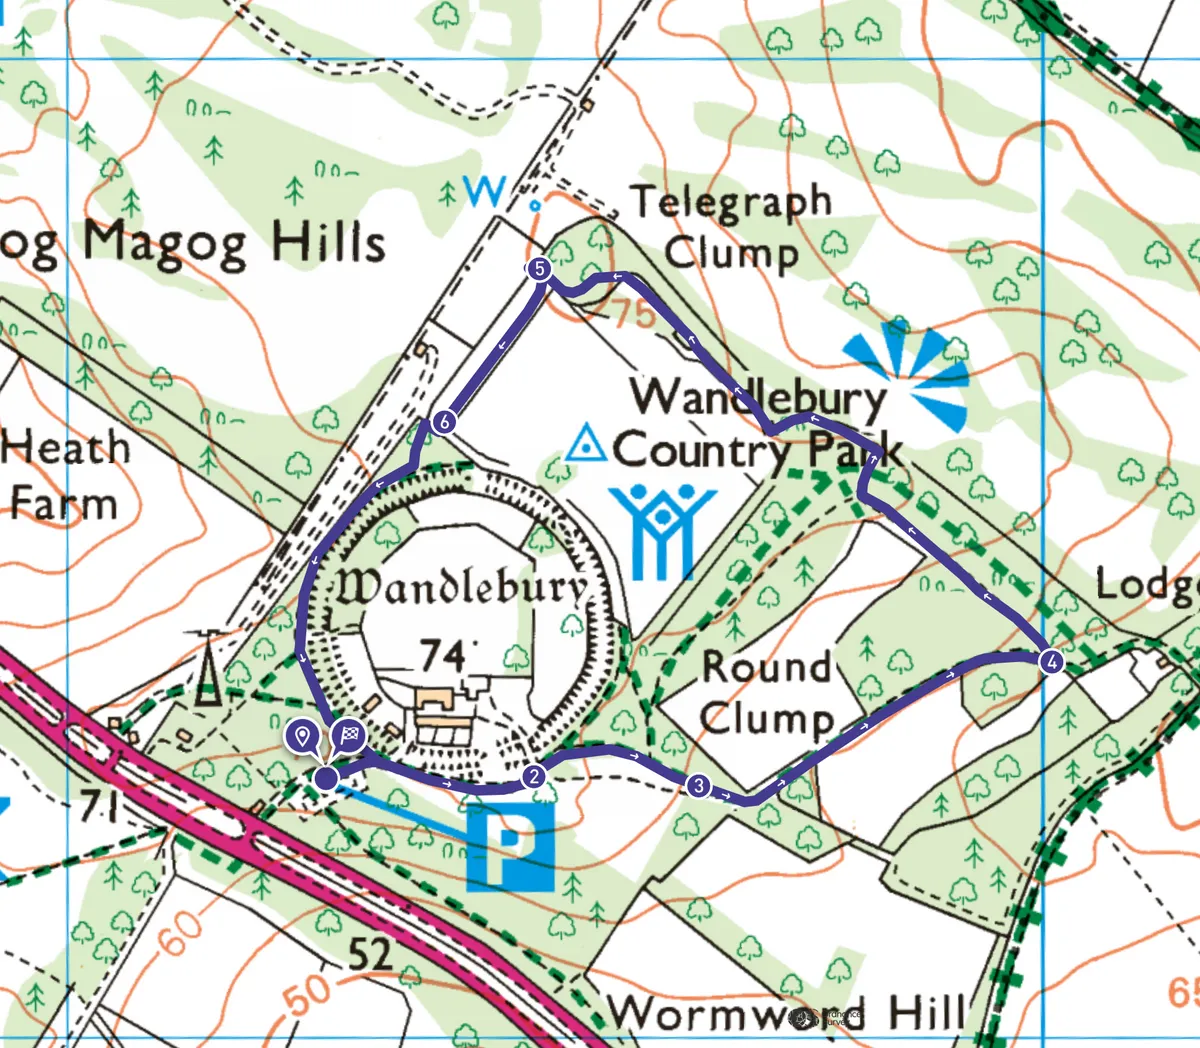 Wandlebury Country Park walk map